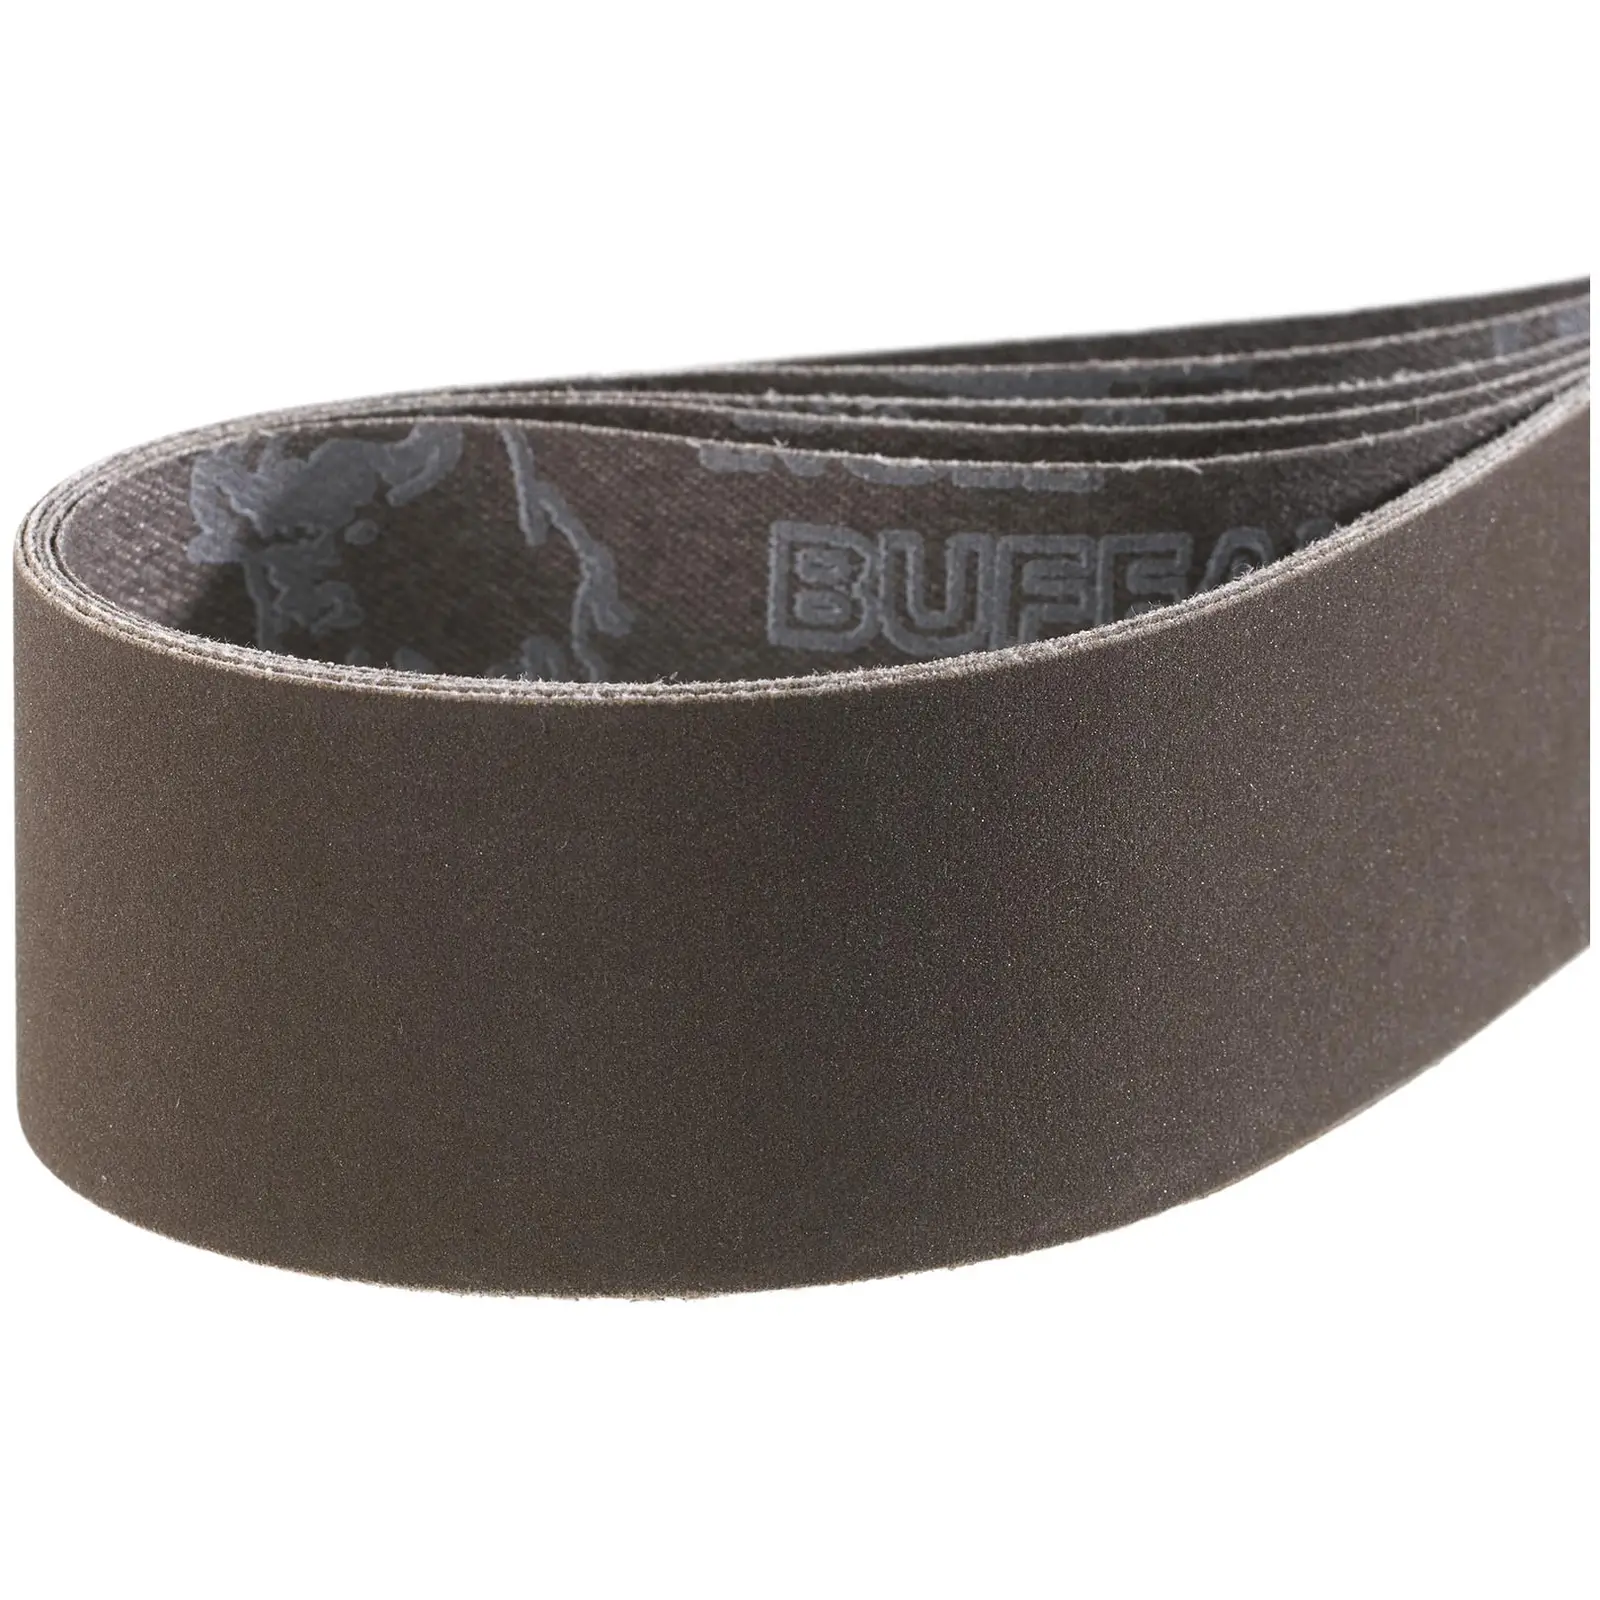 Sanding belts - 760 x 40 mm - 800 graining